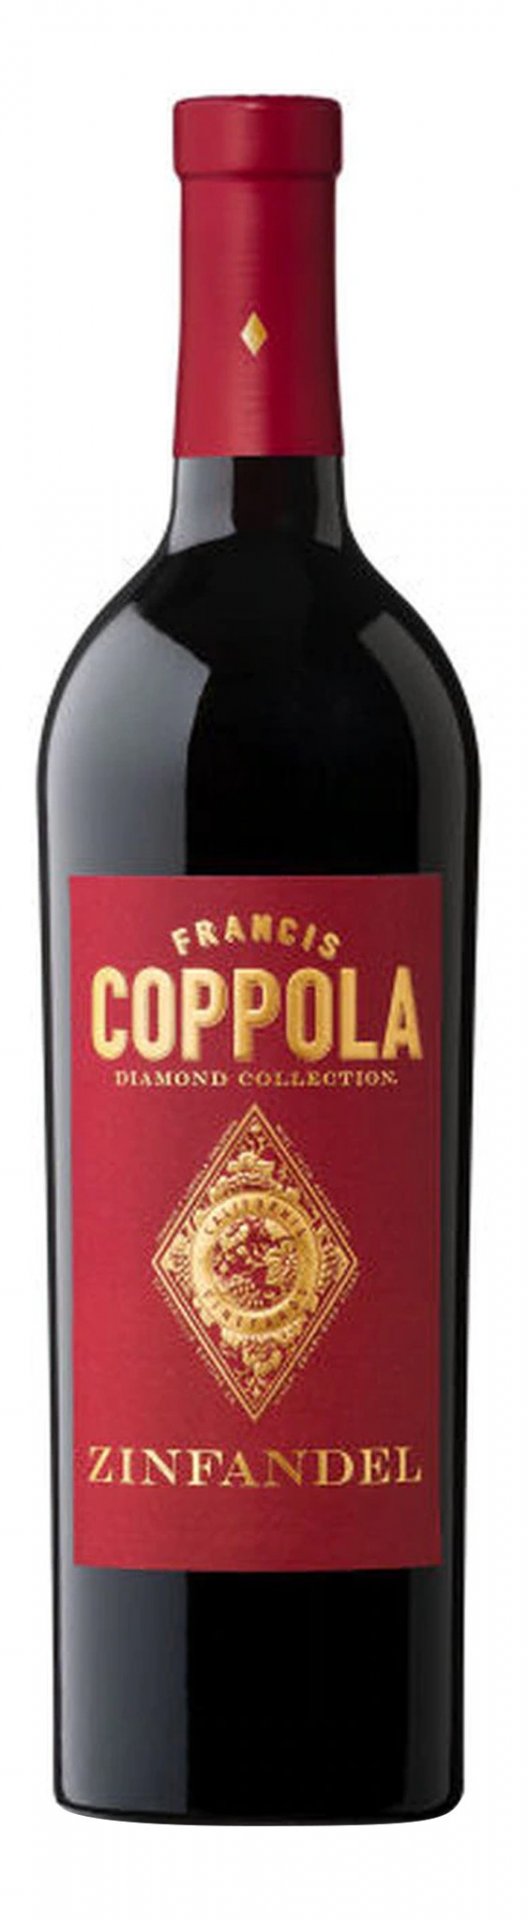 Francis Coppola Diamond Collection Red Label Zinfandel